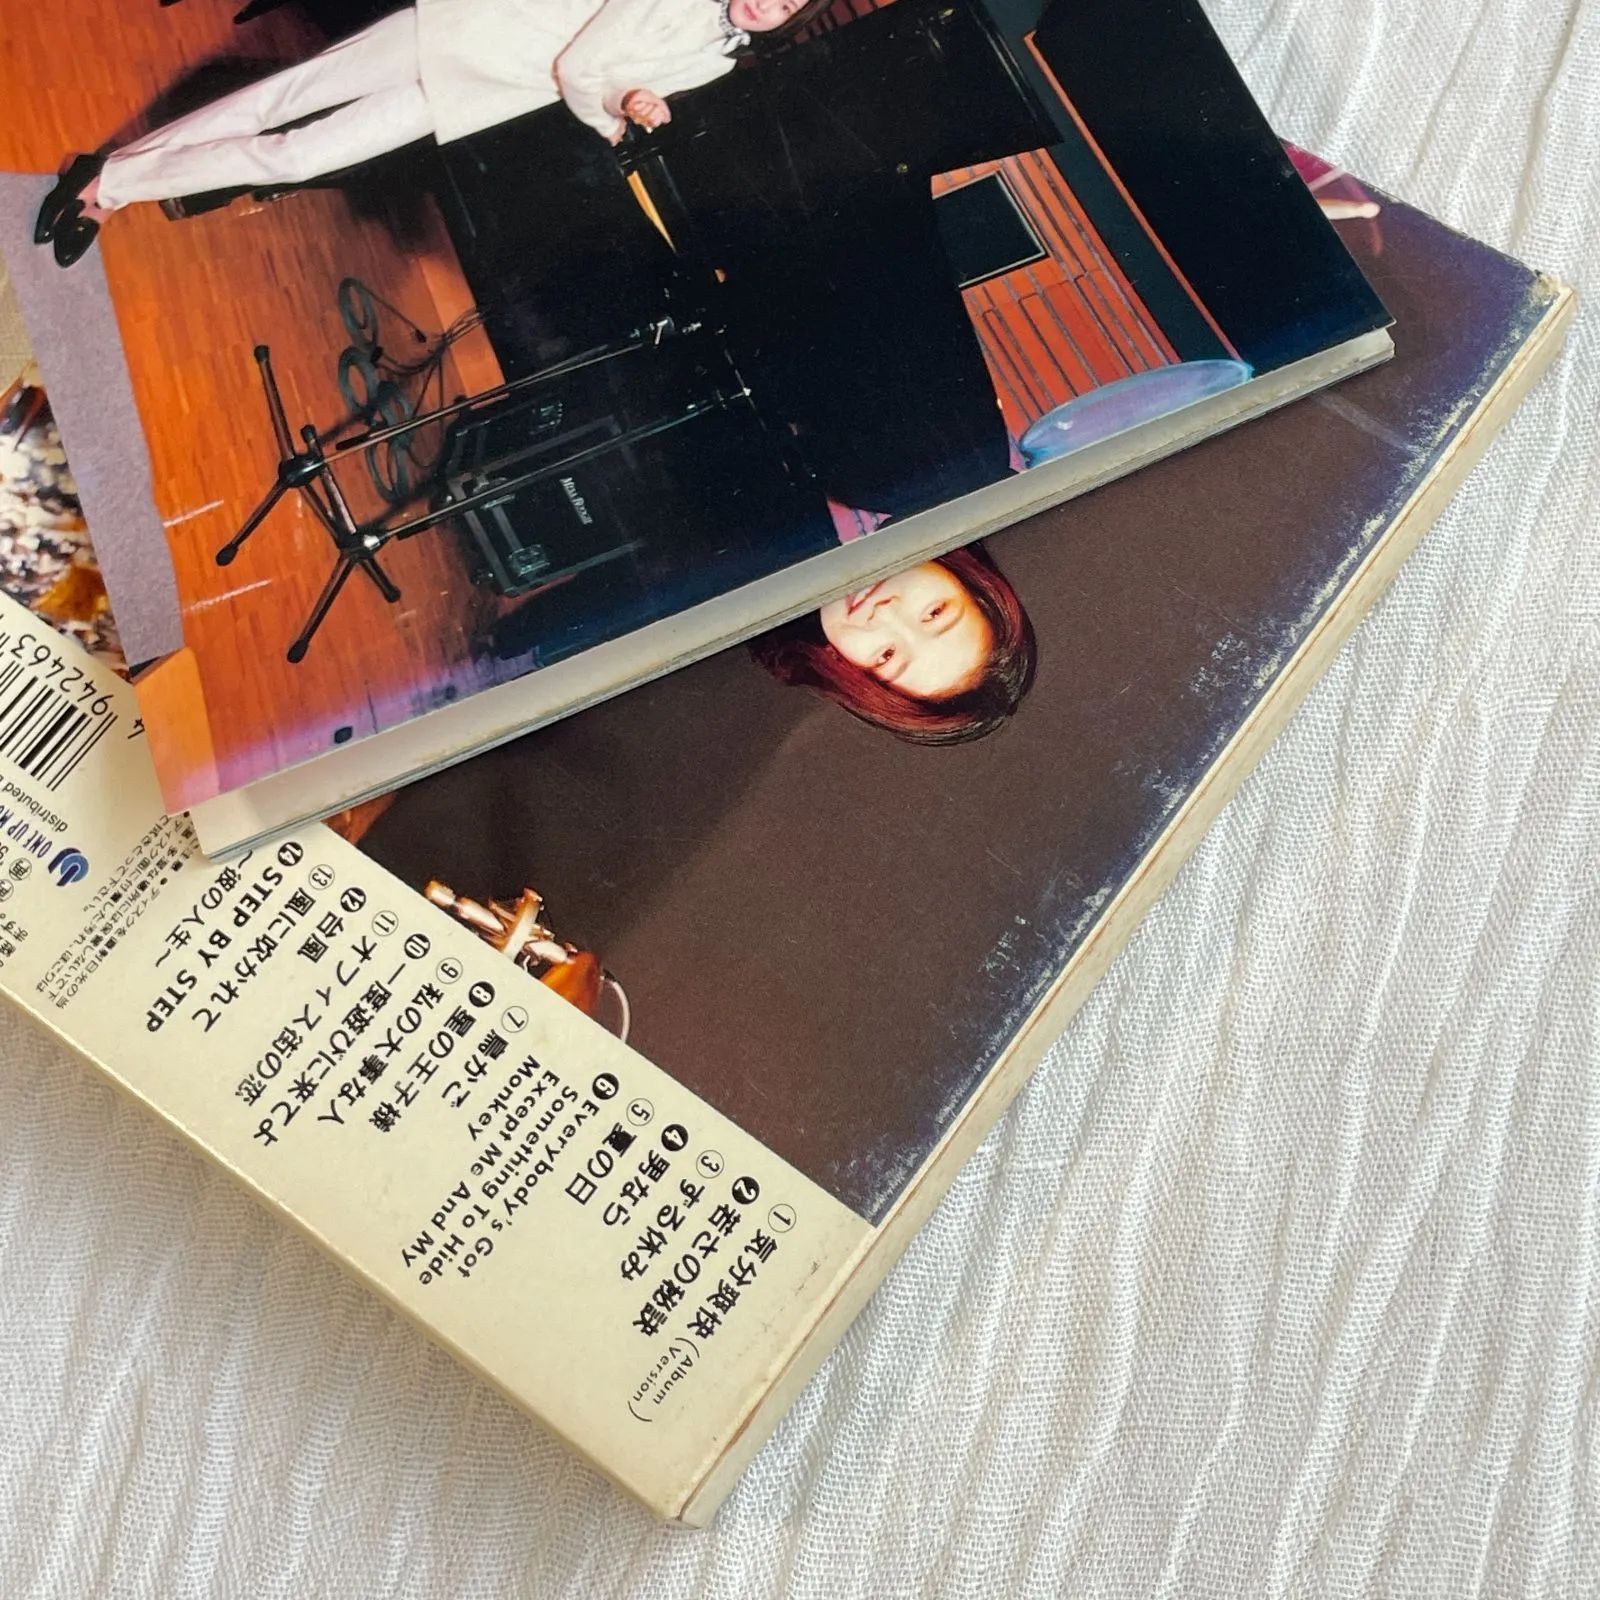 森高千里｜STEP BY STEP（初回限定盤）｜中古CD - メルカリ